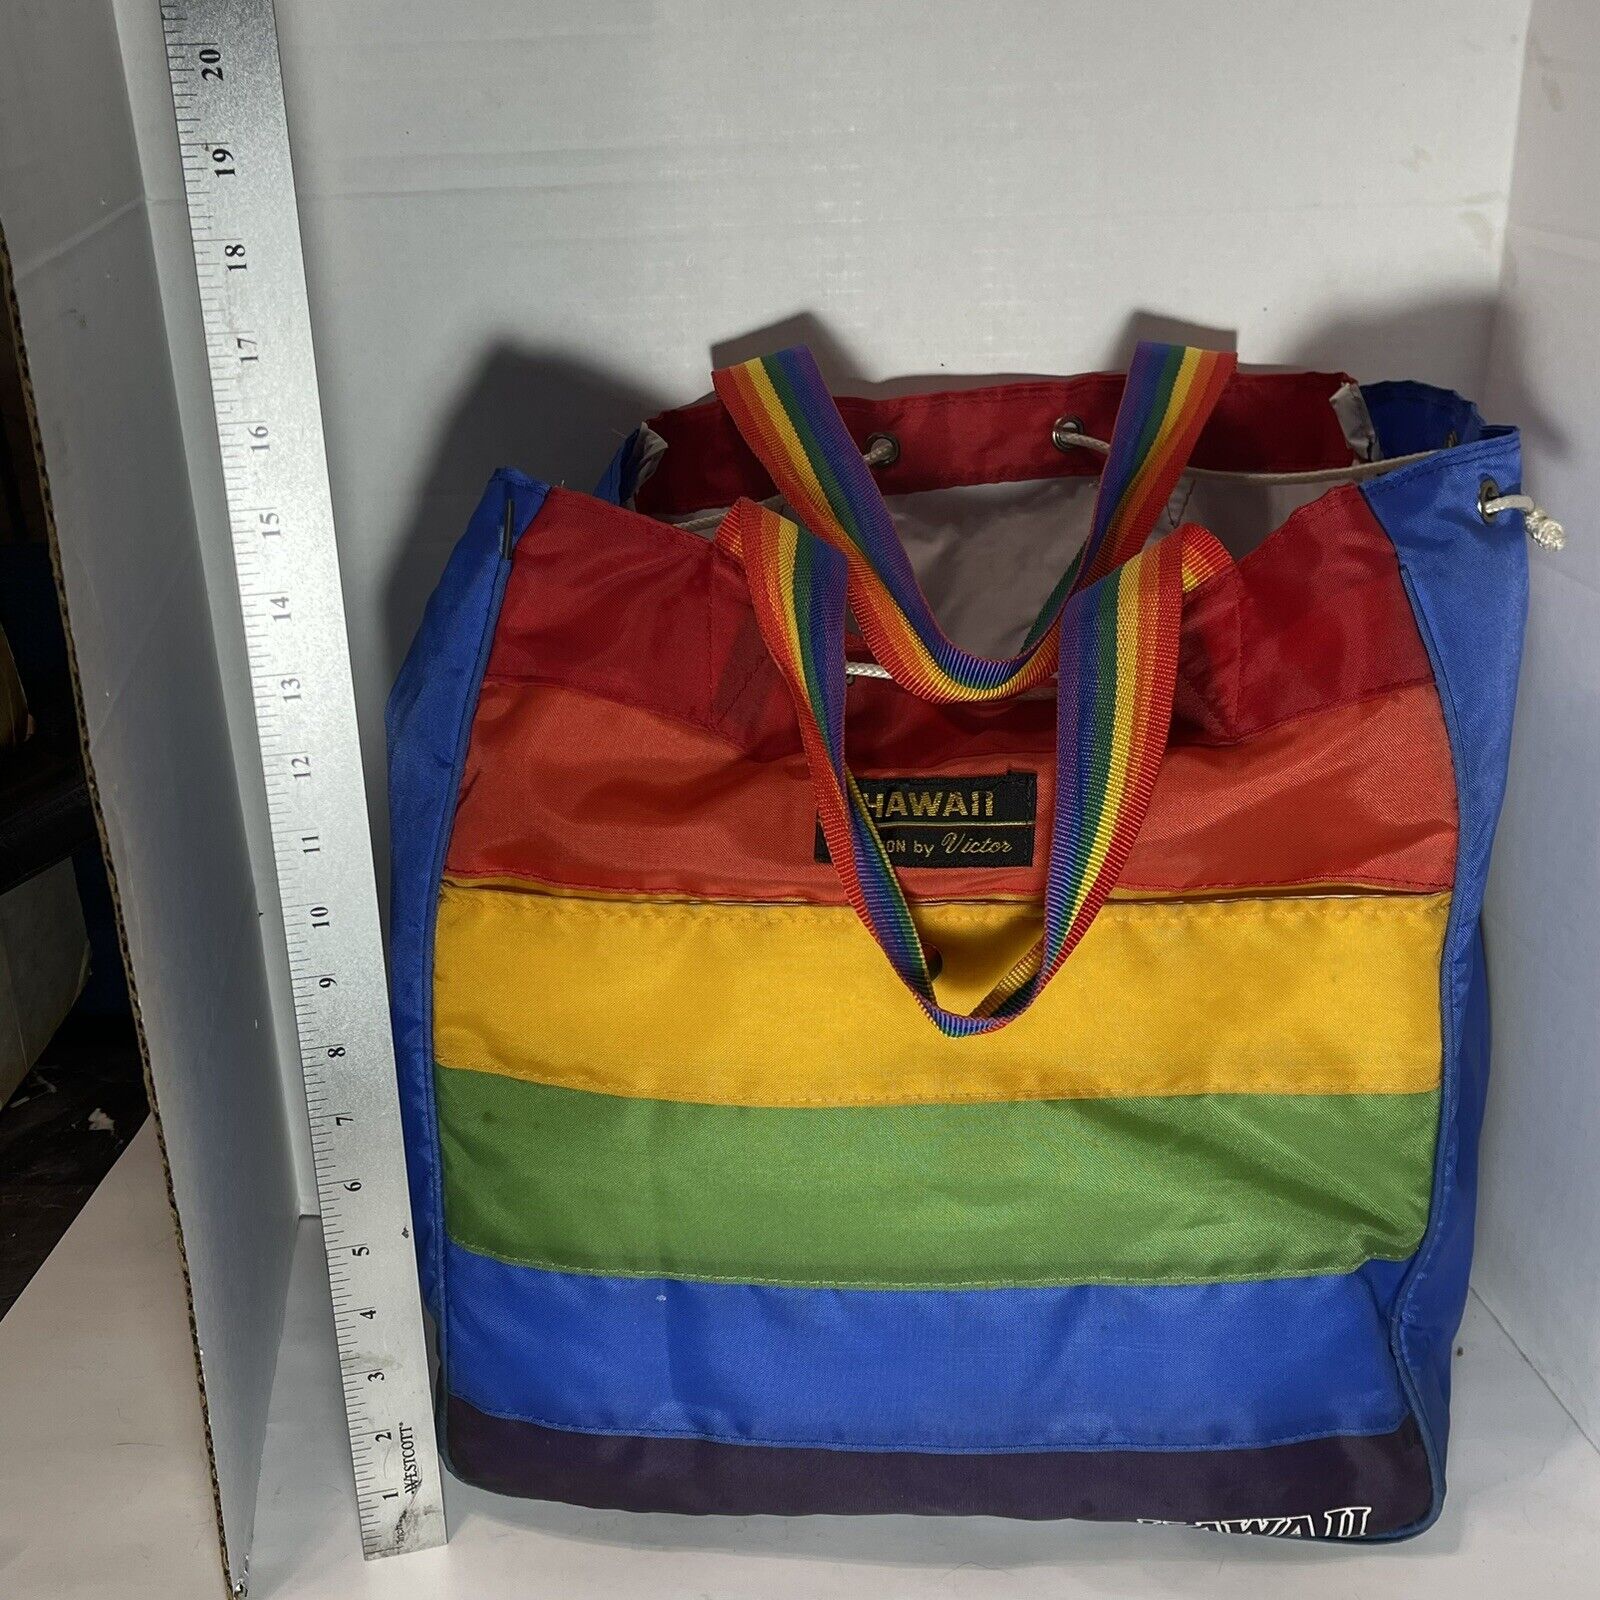 Fashion by Victor "Hawaii" rainbow bag